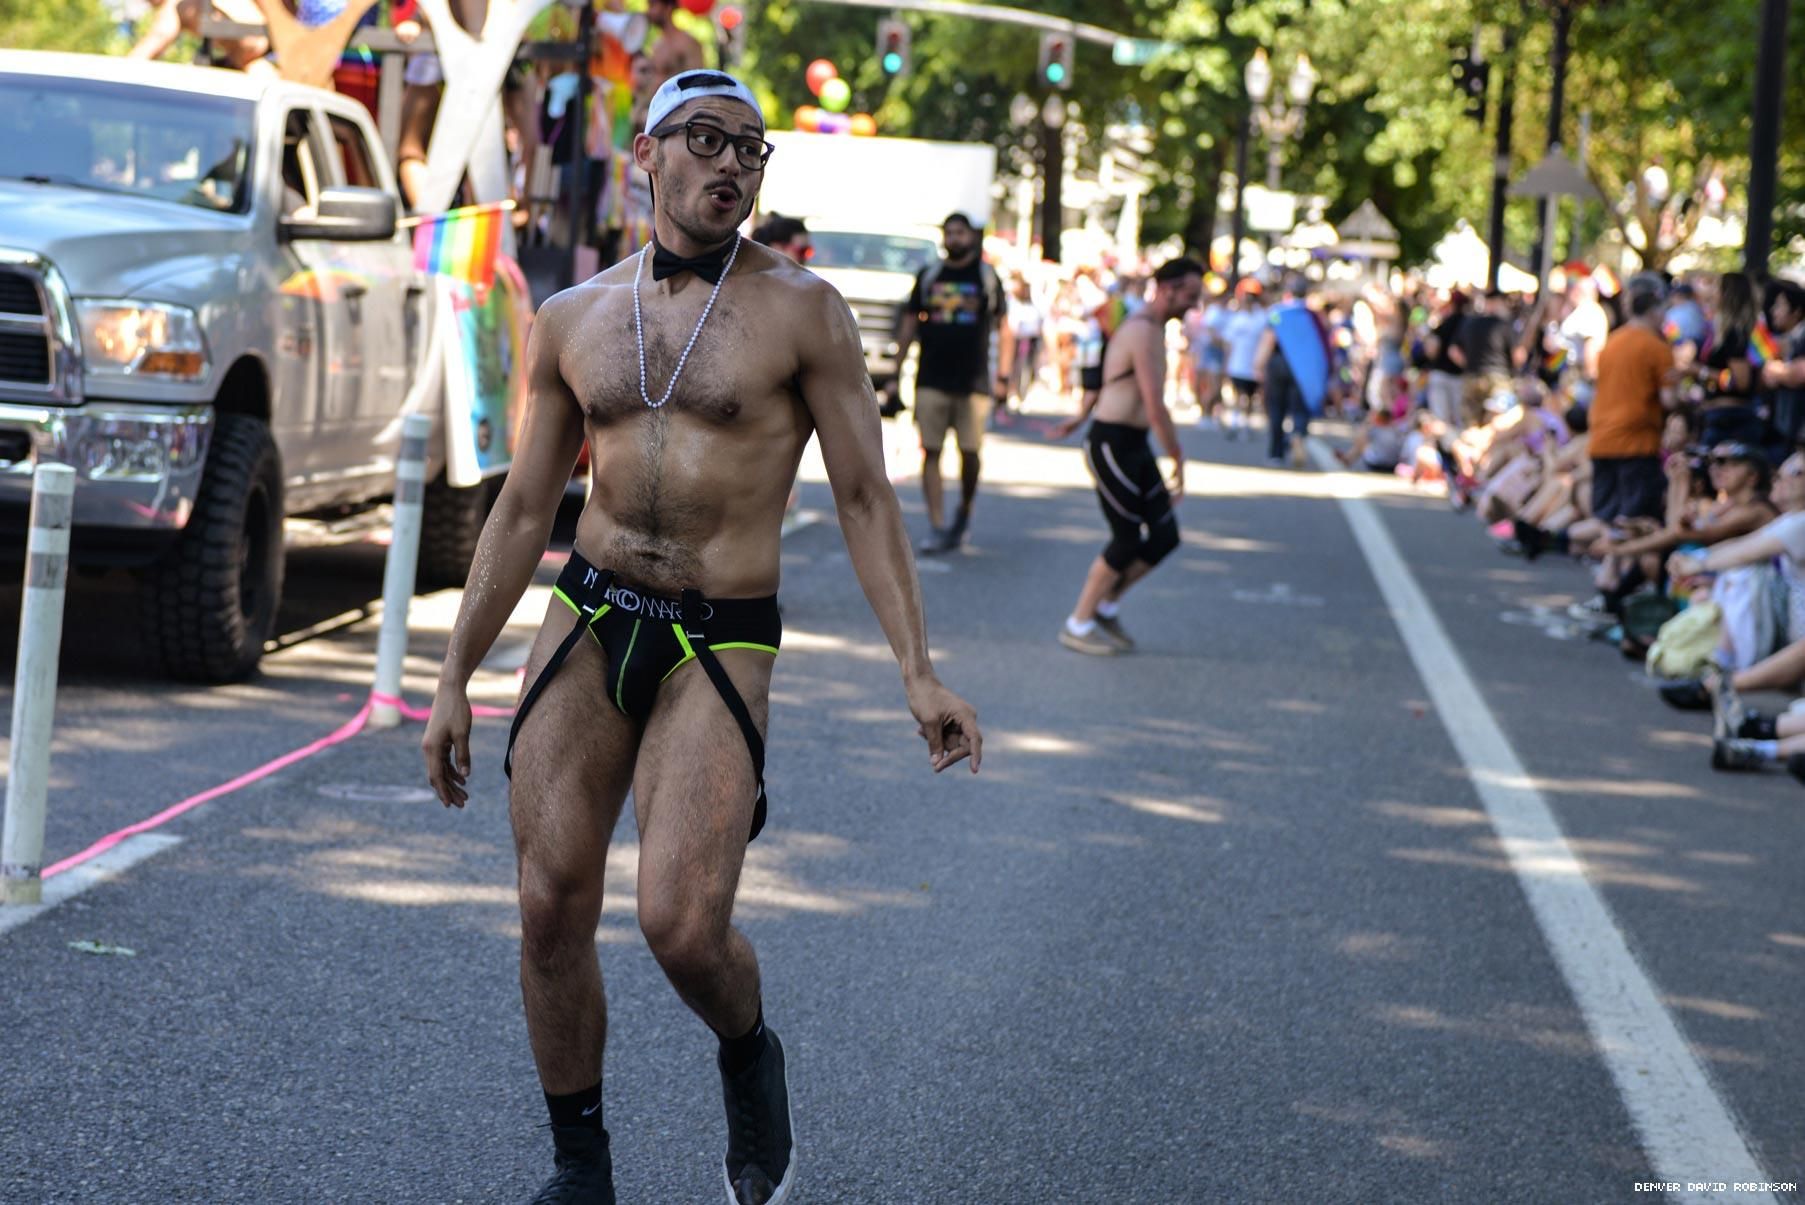 105 Photos of Portland's Pride Parade — Inclusive and Controversial